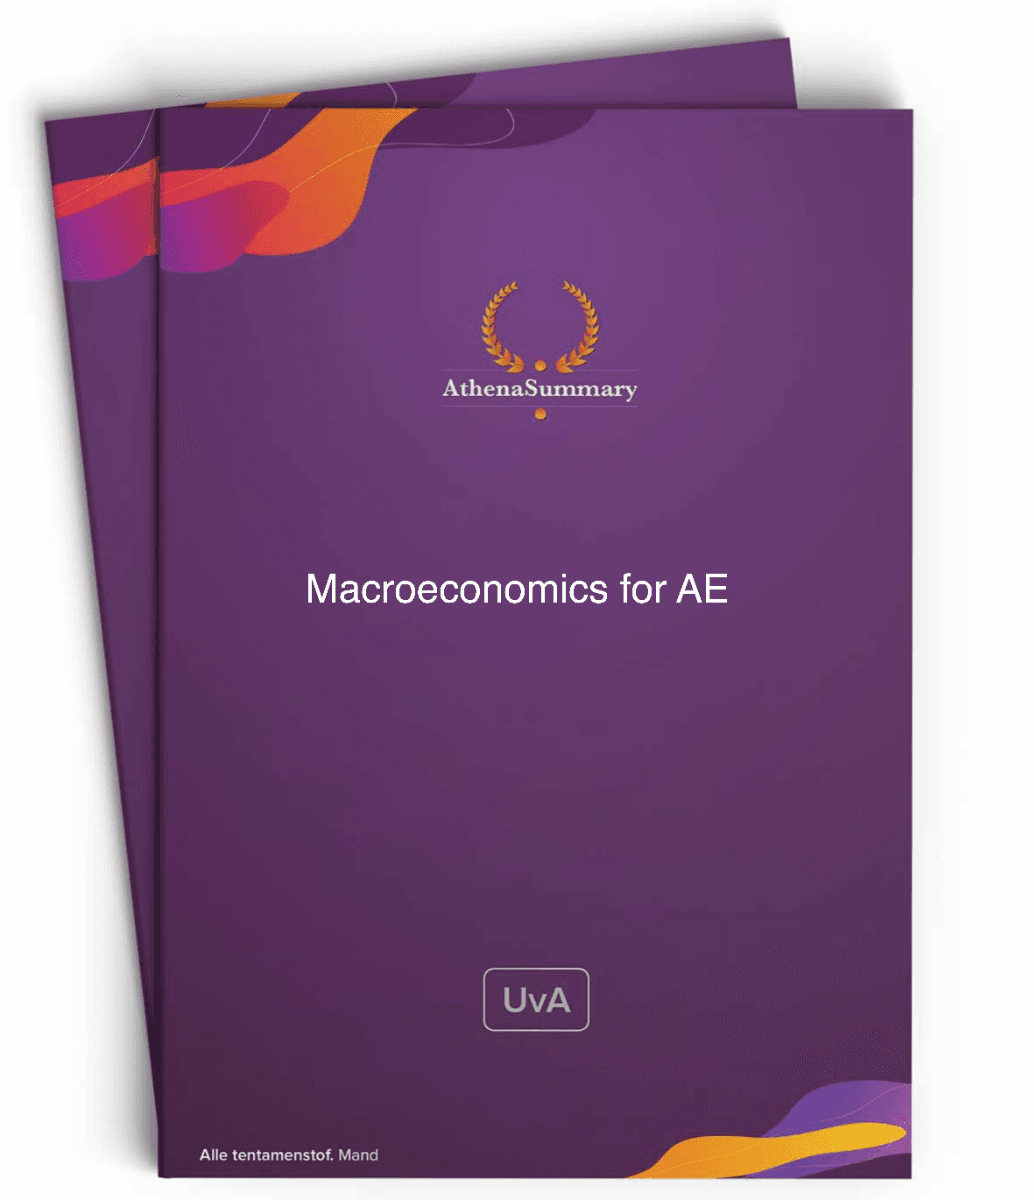 Literature Summary: Macroeconomics for AE